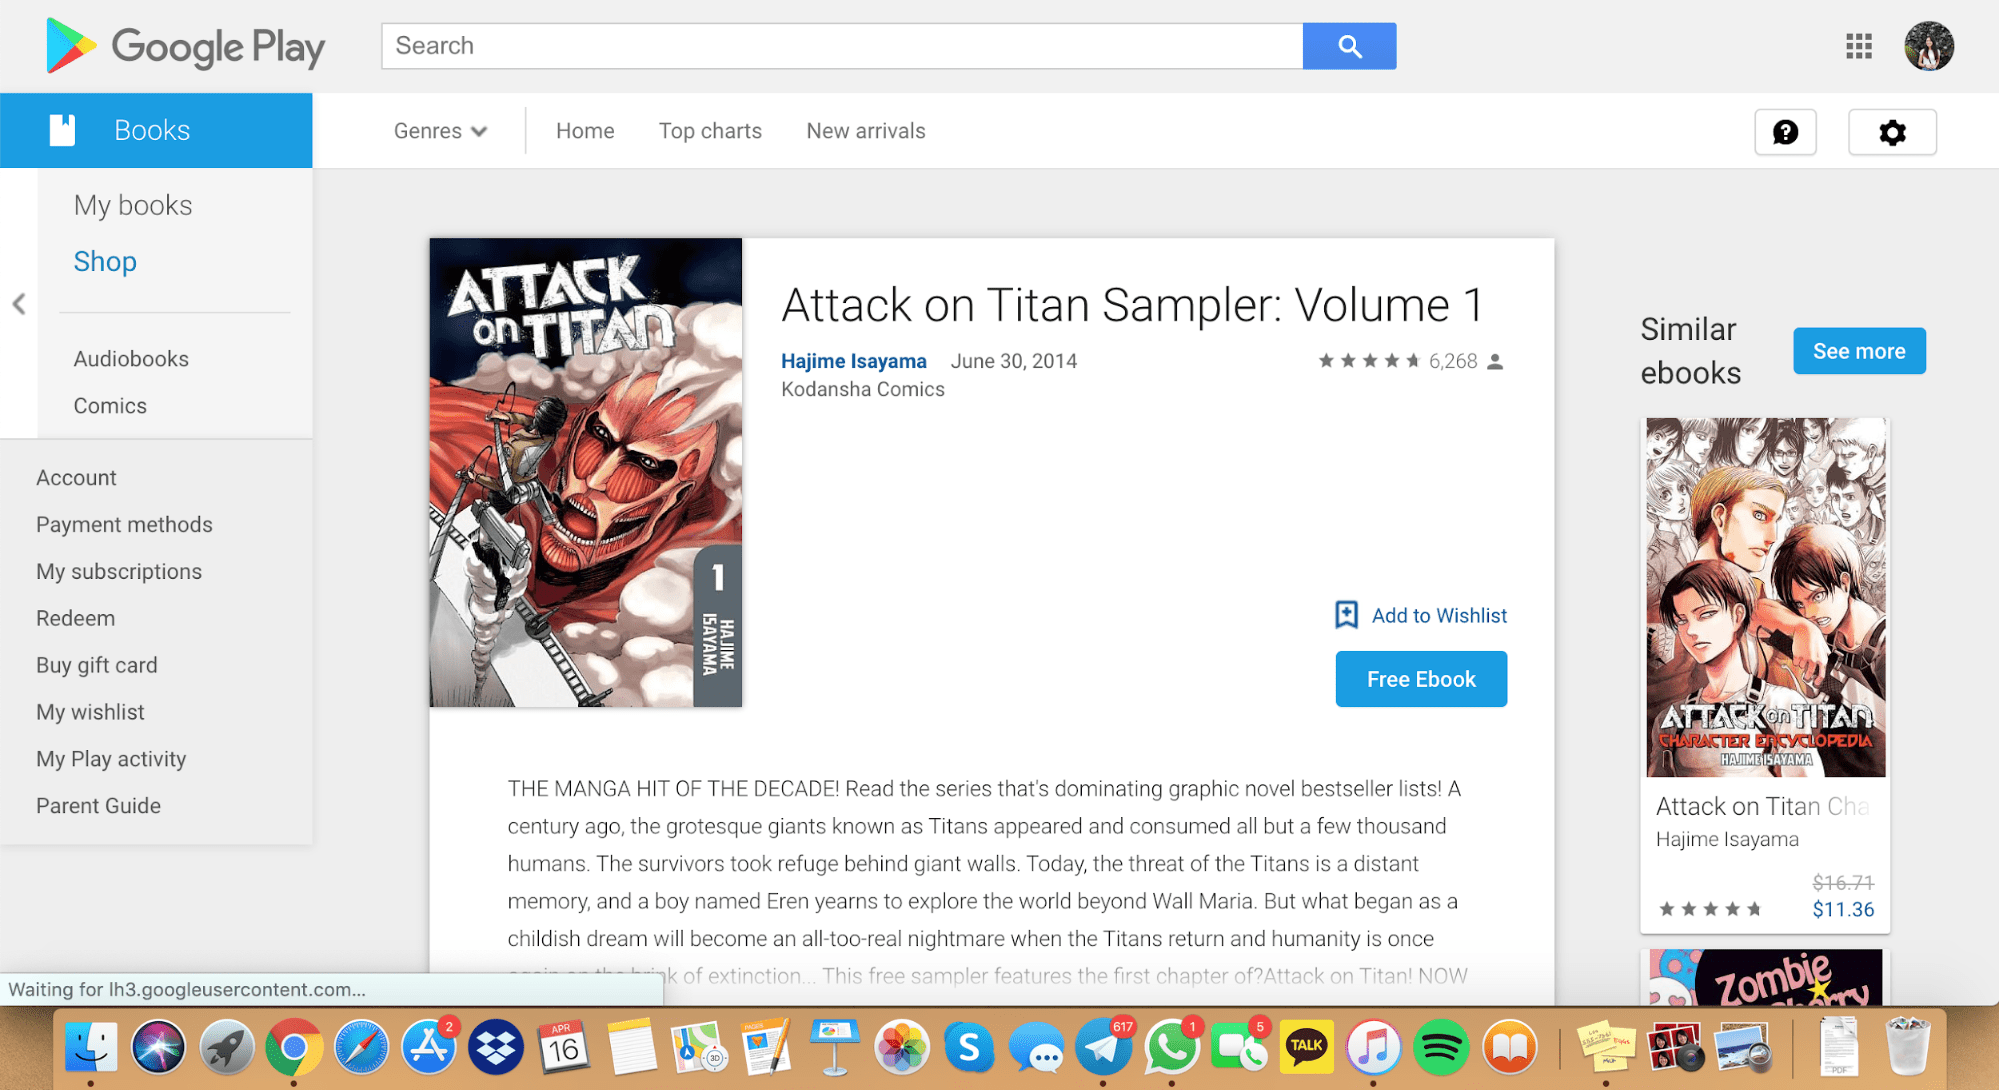 Attack on Titan on Google Play ebookstore